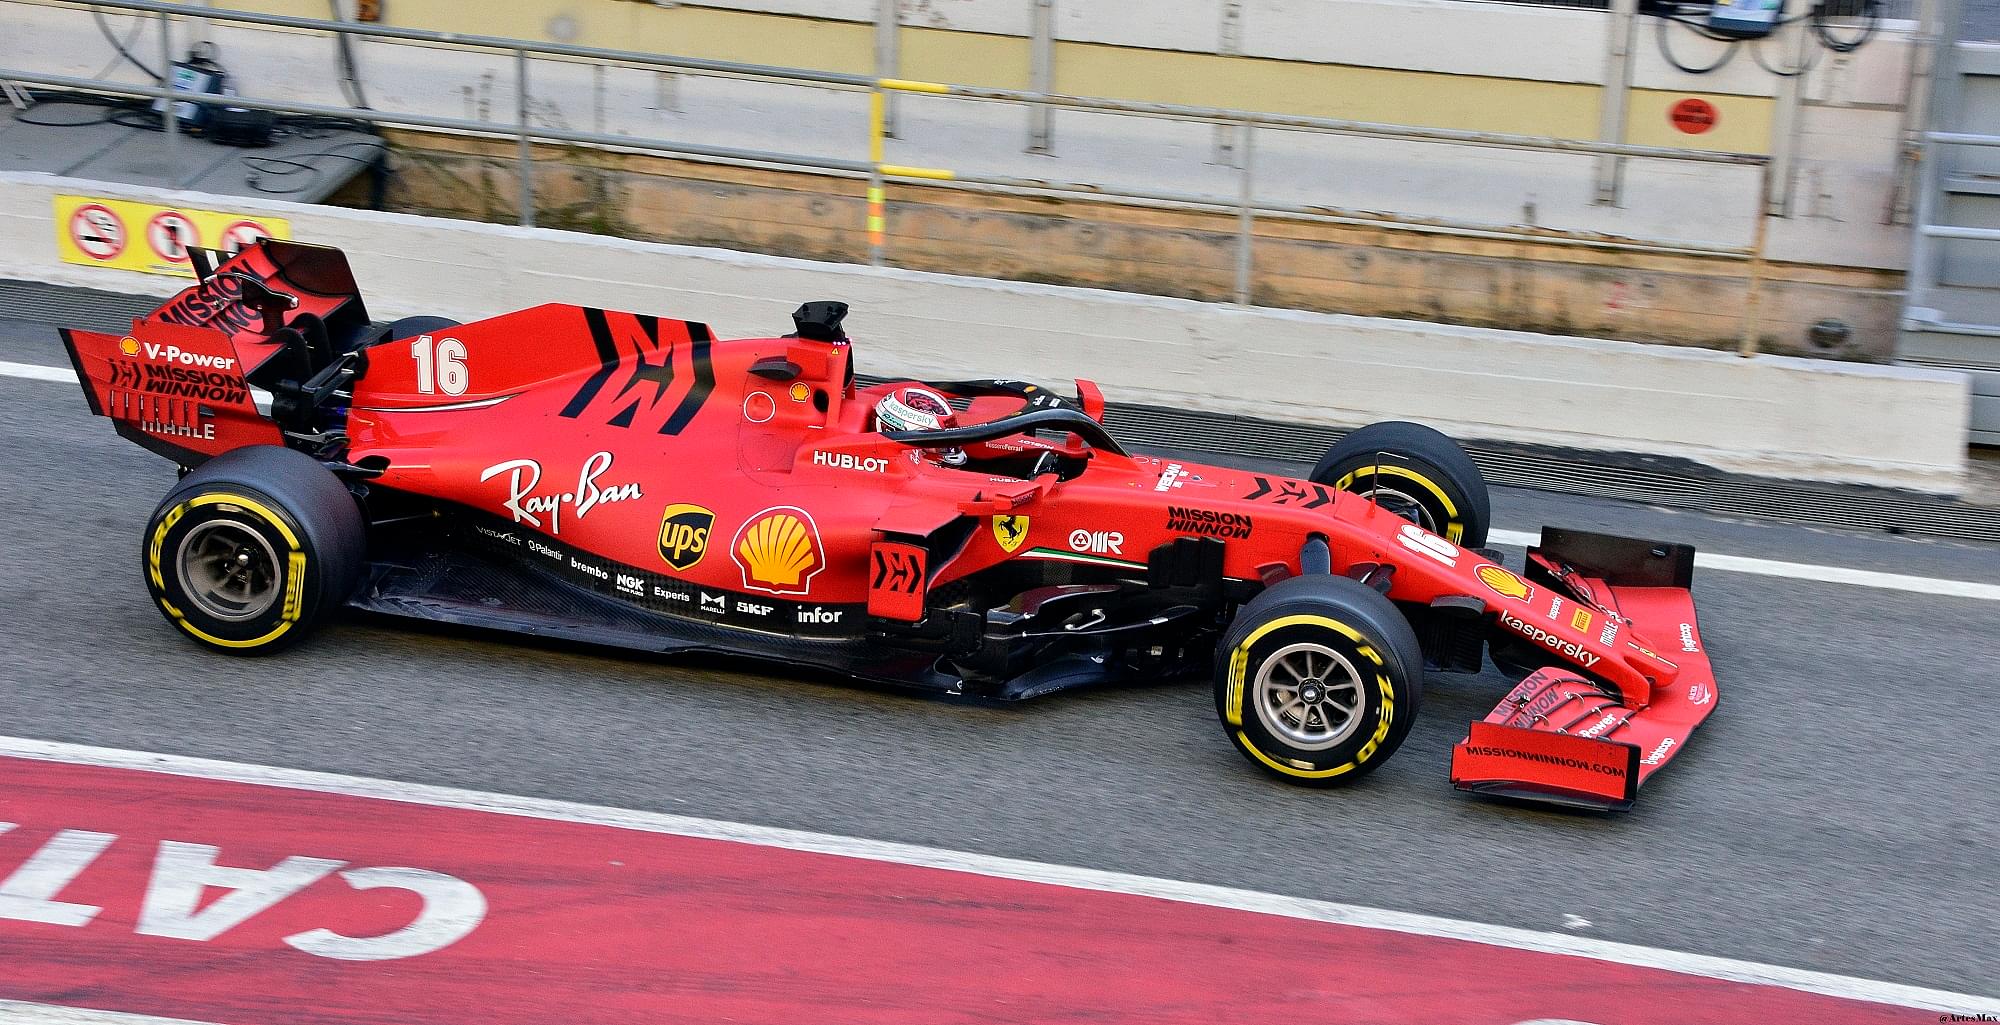 Ferrari second team to test its 2020 car ahead of F1 season starter at Austria